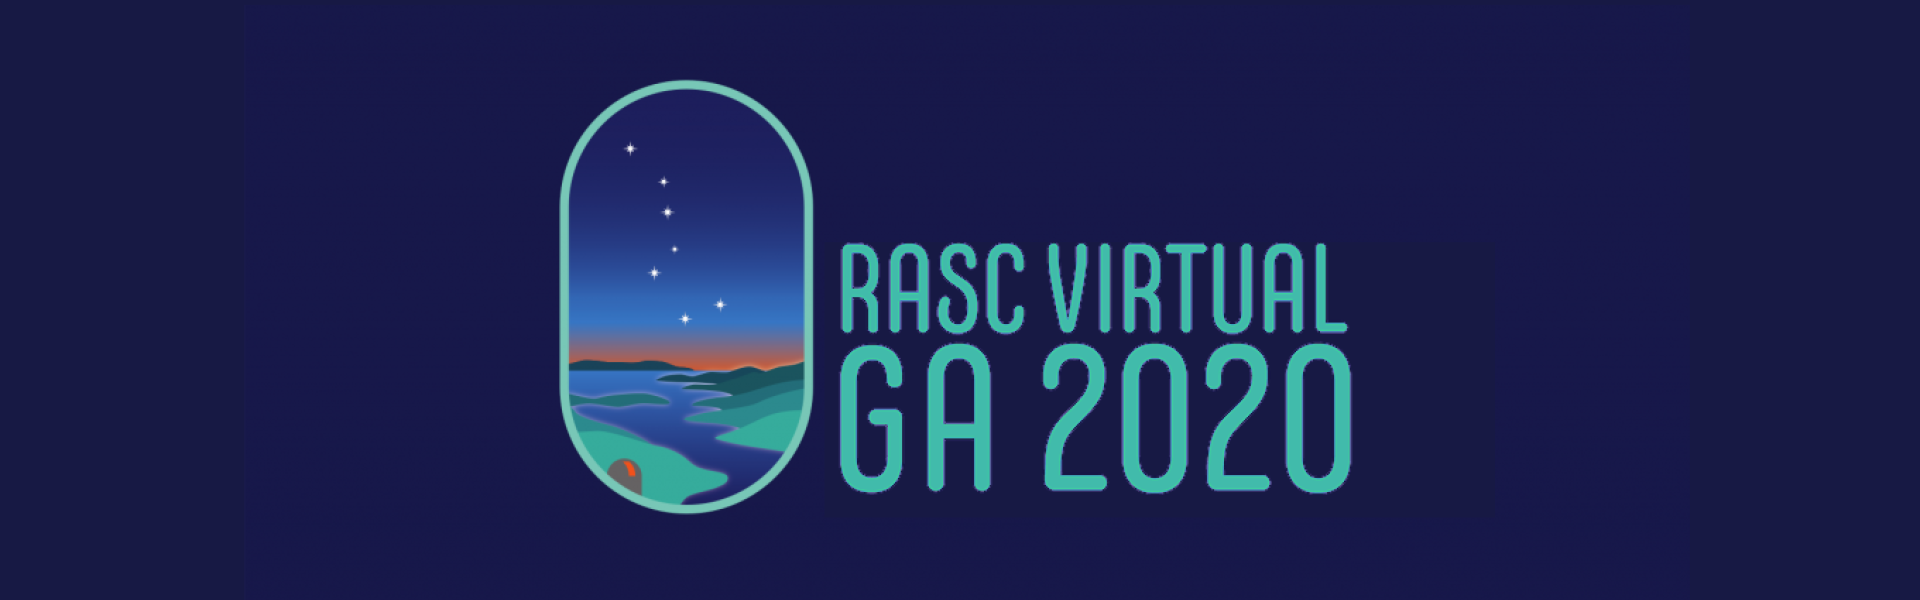 RASC Virtual GA 2020